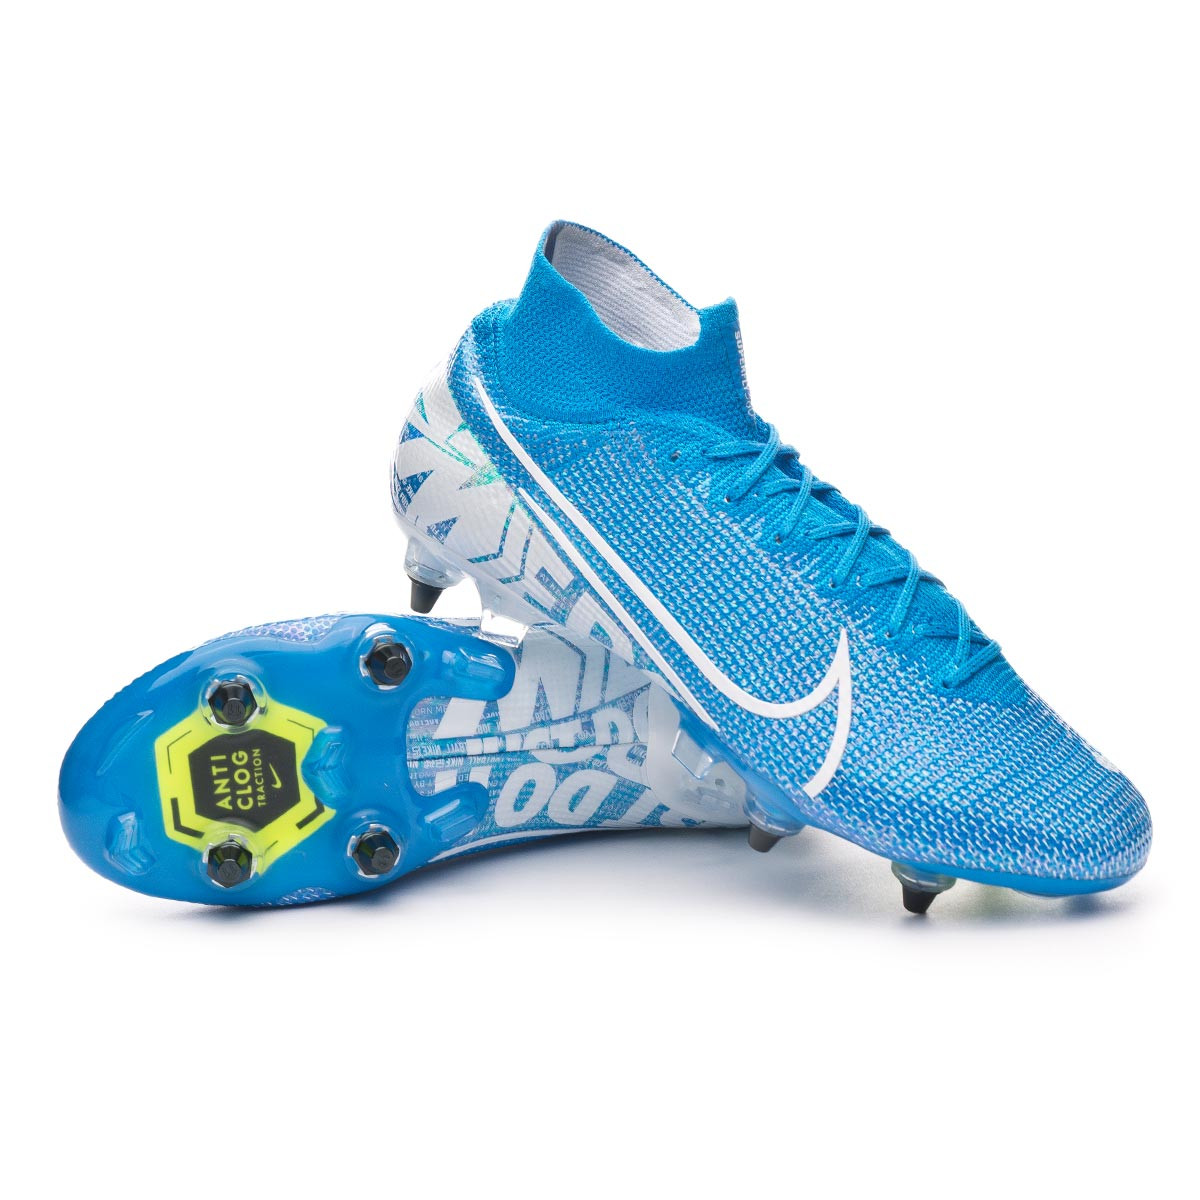 Bota de fútbol Nike Mercurial Superfly VII Elite ACC SG-Pro Blue  hero-White-Volt-Obsidian - Tienda de fútbol Fútbol Emotion